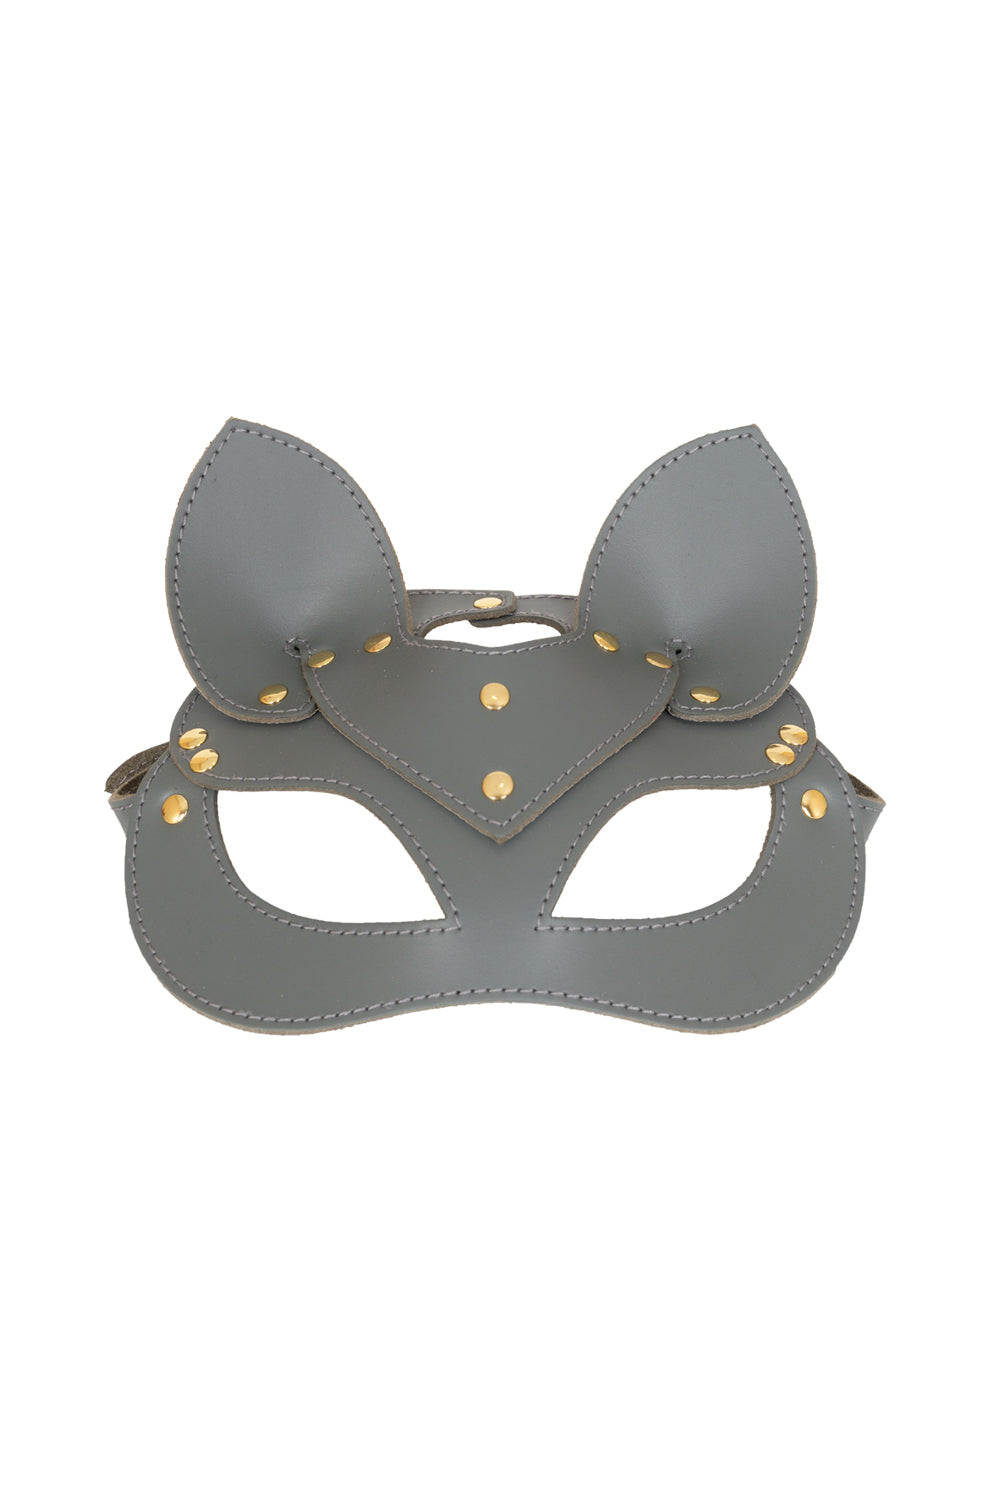 Leather сat mask, kitty fetish mask. Dark Blue